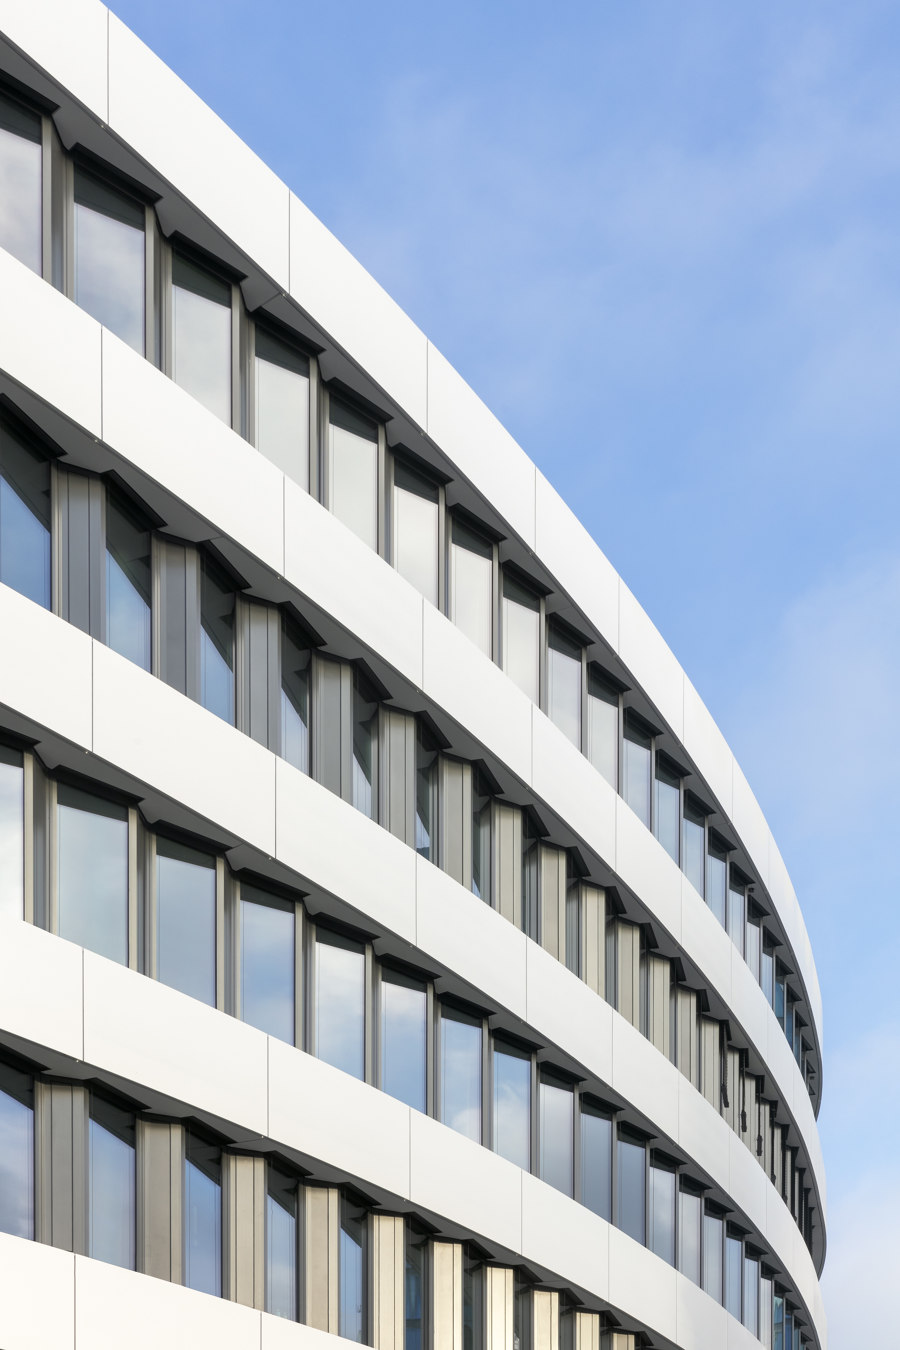 trivago Headquarter, Düsseldorf di slapa oberholz pszczulny | sop architekten | Edifici per uffici